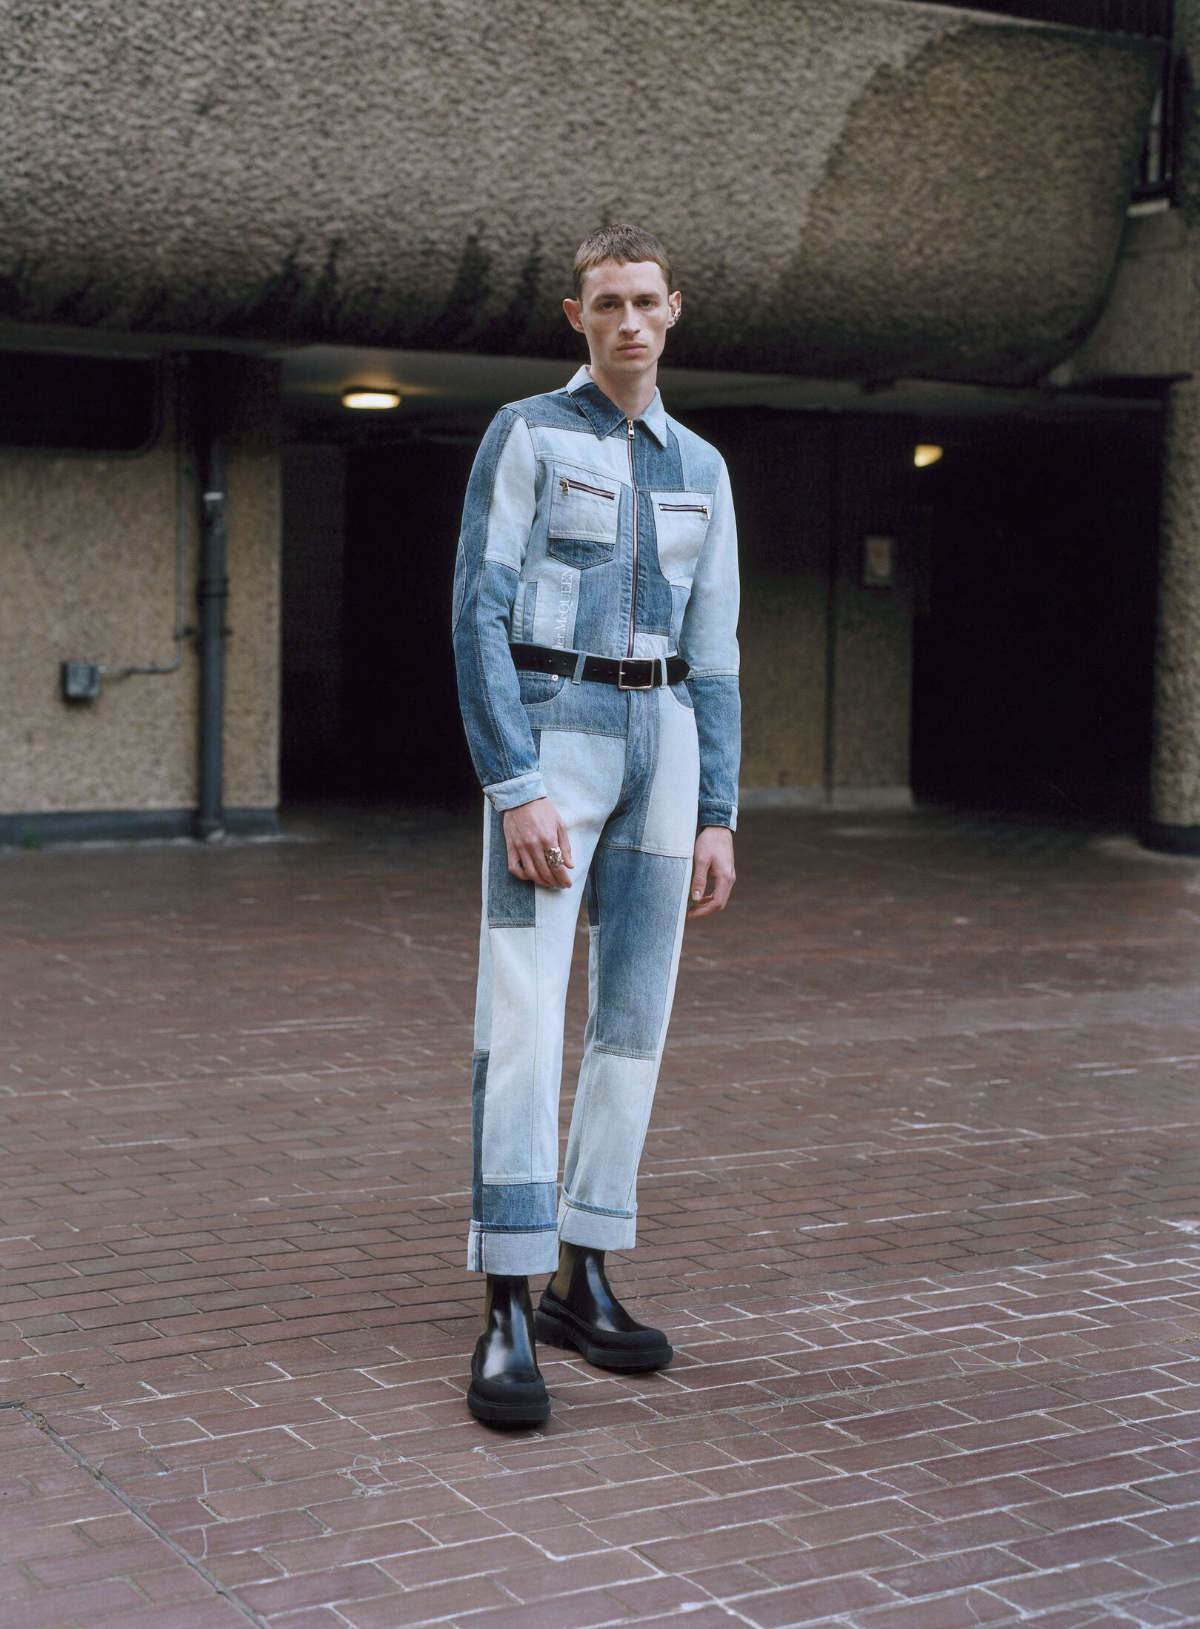 Alexander McQueen Presents Its New Pre-Spring/Summer 2023 Menswear Collection